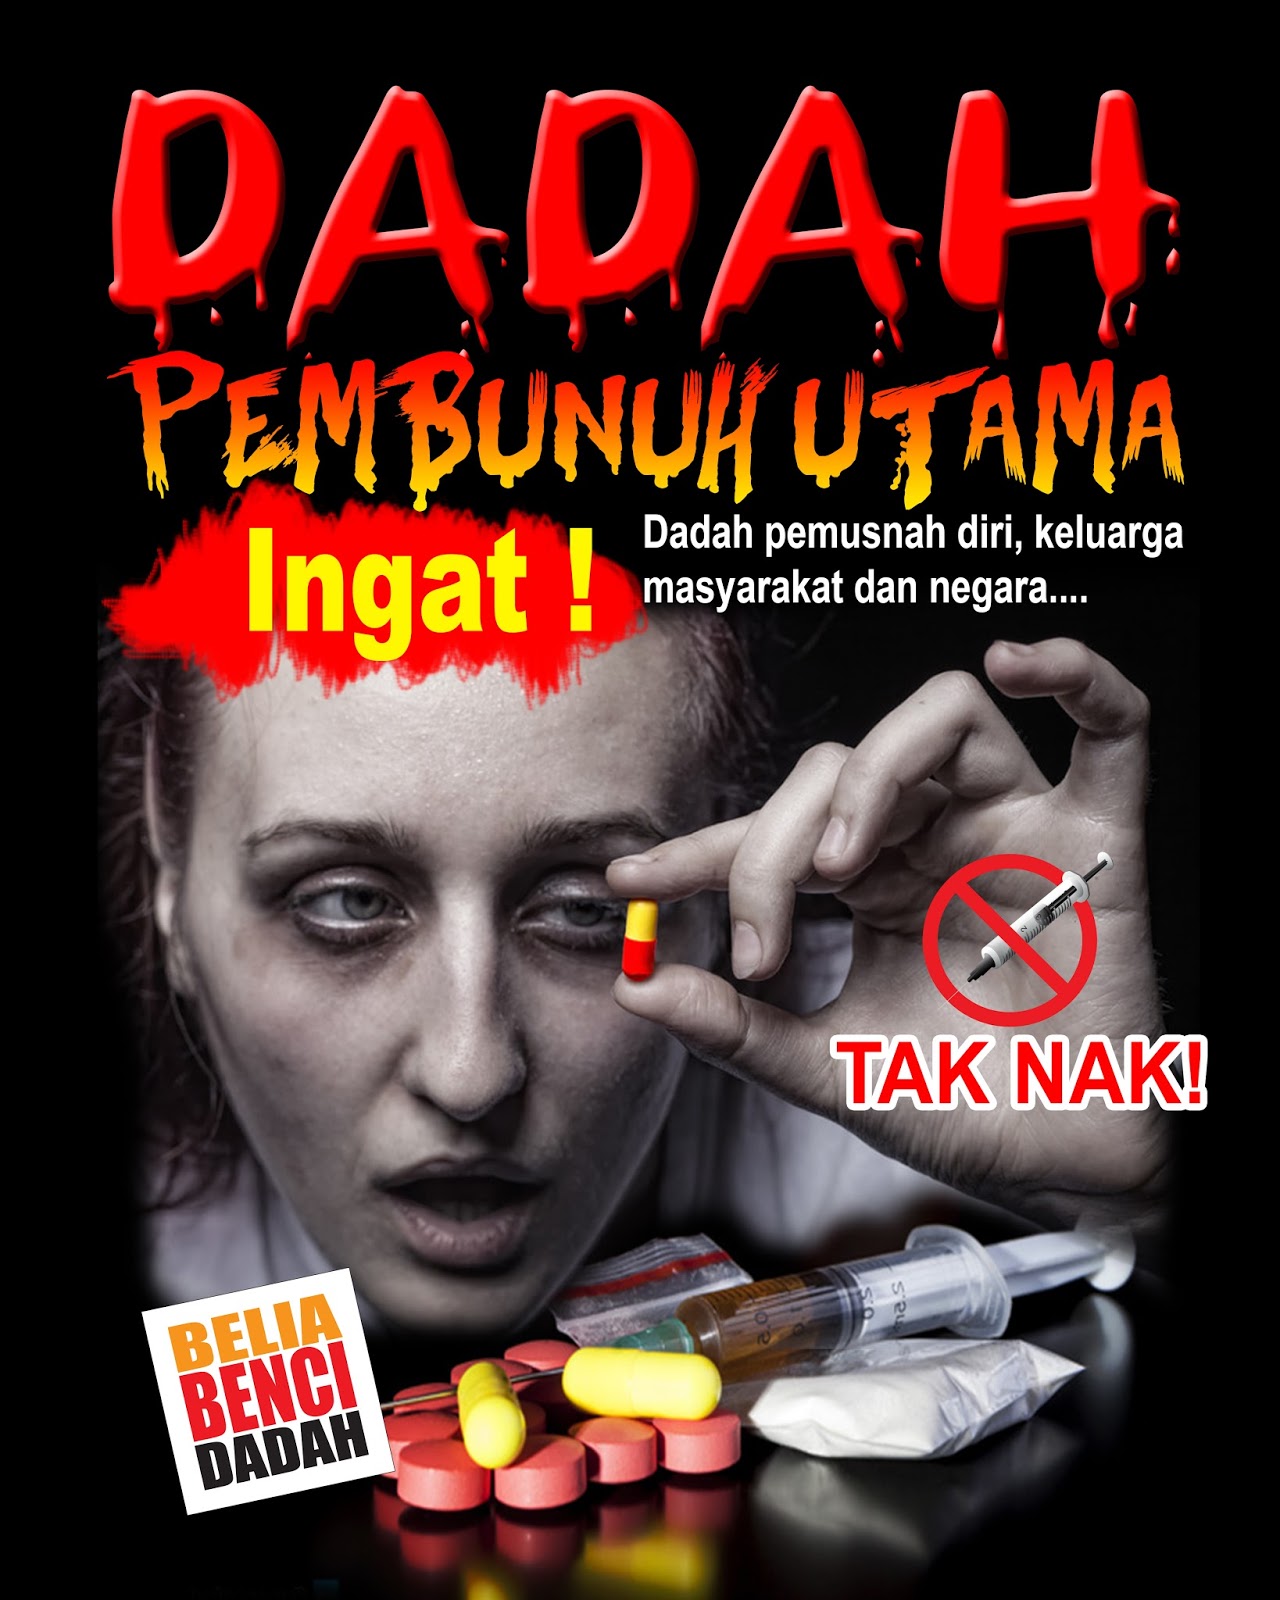 21+ Poster Mewarna Anti Dadah, Percantik Hunian!